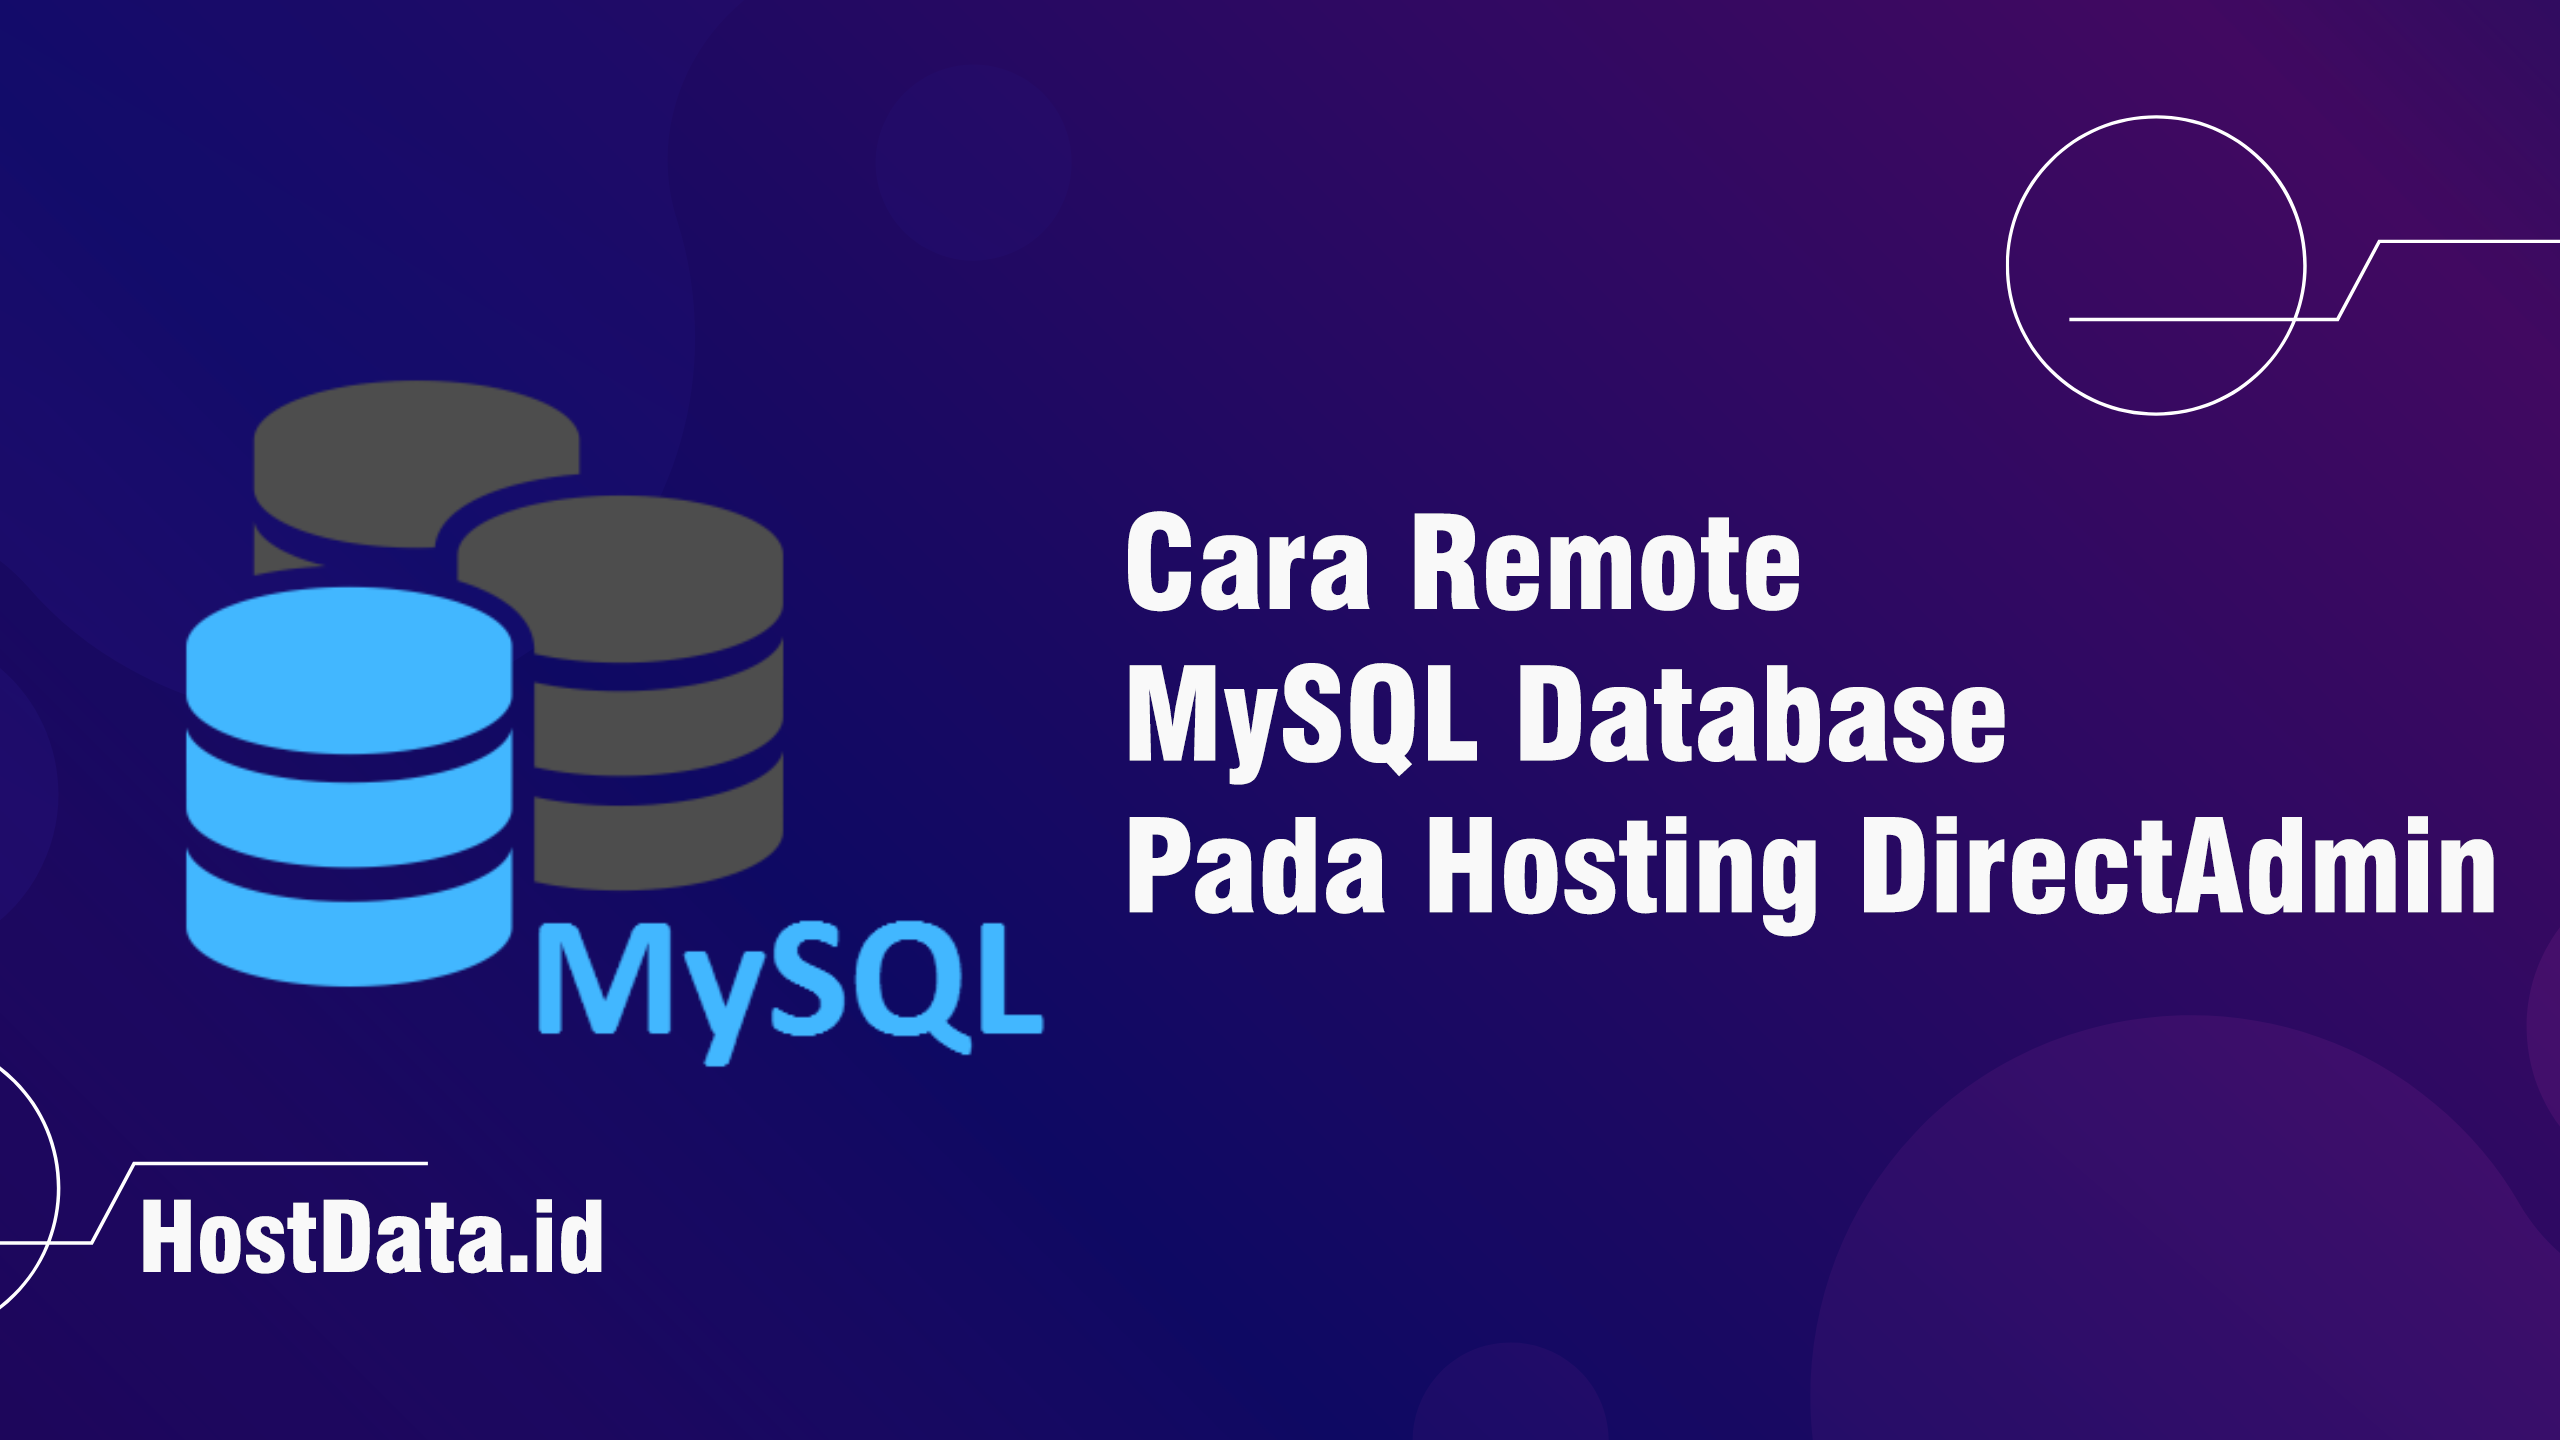 Cara Remote MySQL Database Pada Hosting DirectAdmin